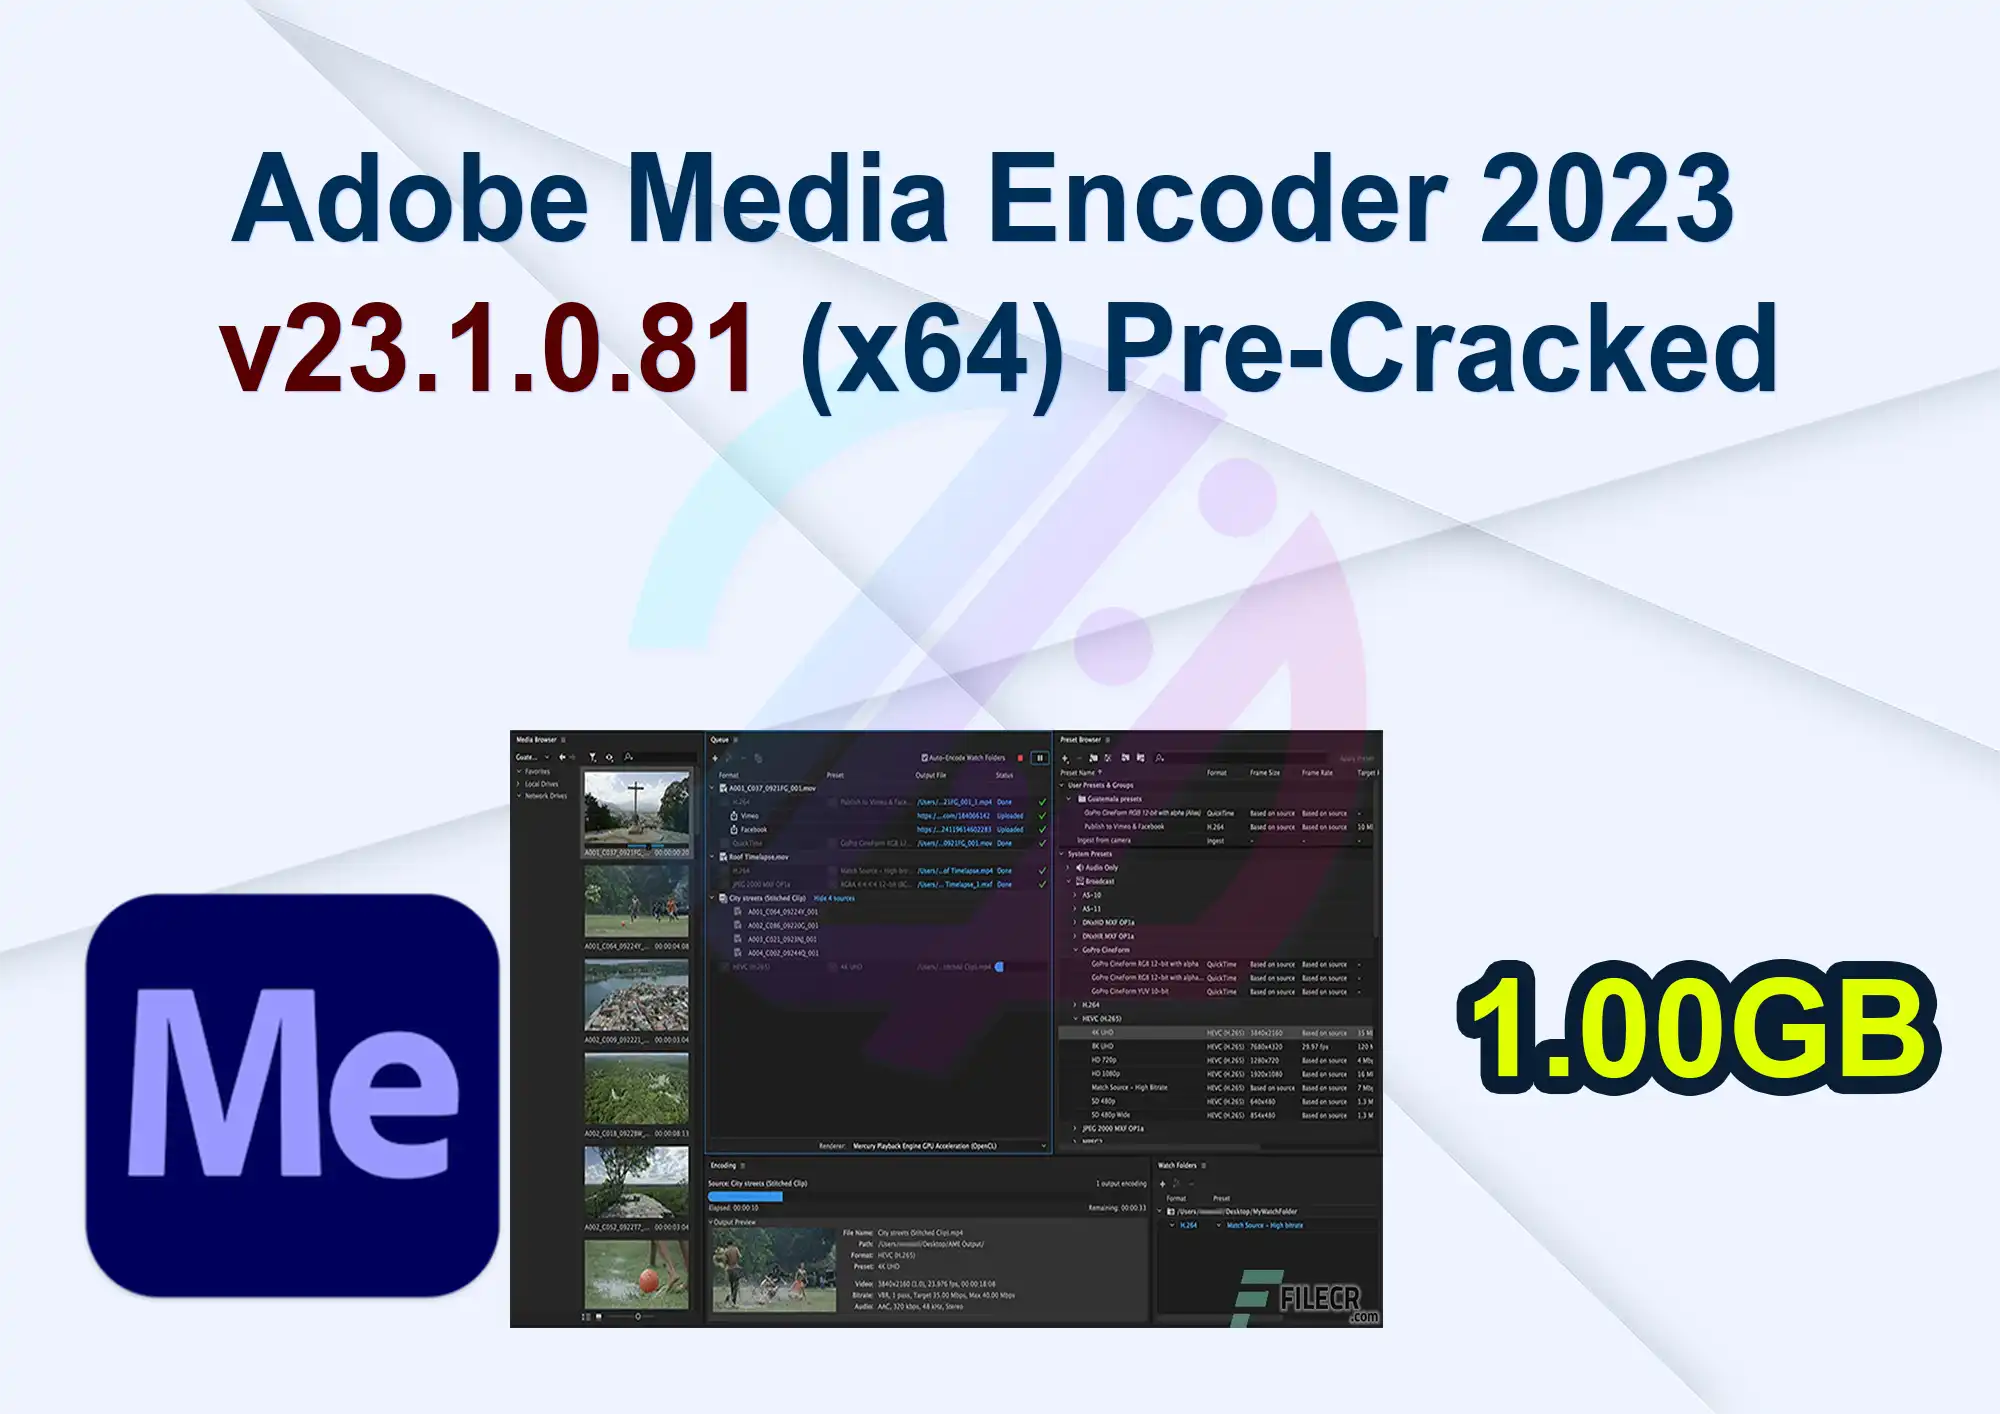 Adobe Media Encoder 2023 v23.1.0.81 (x64) Pre-Cracked